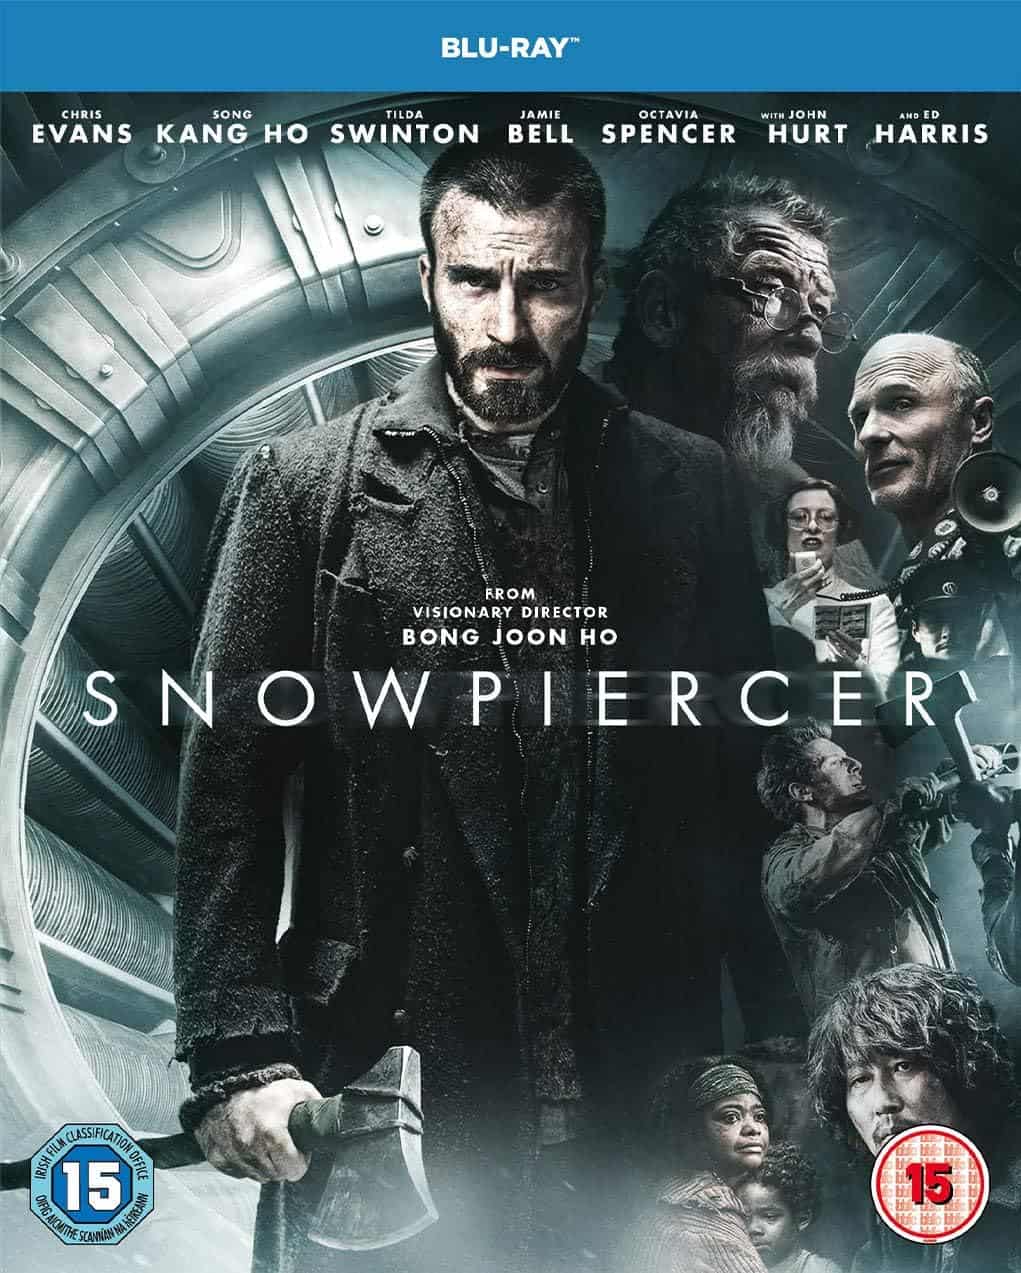 Film Review: Snowpiercer (2013) by Bong Joon-ho